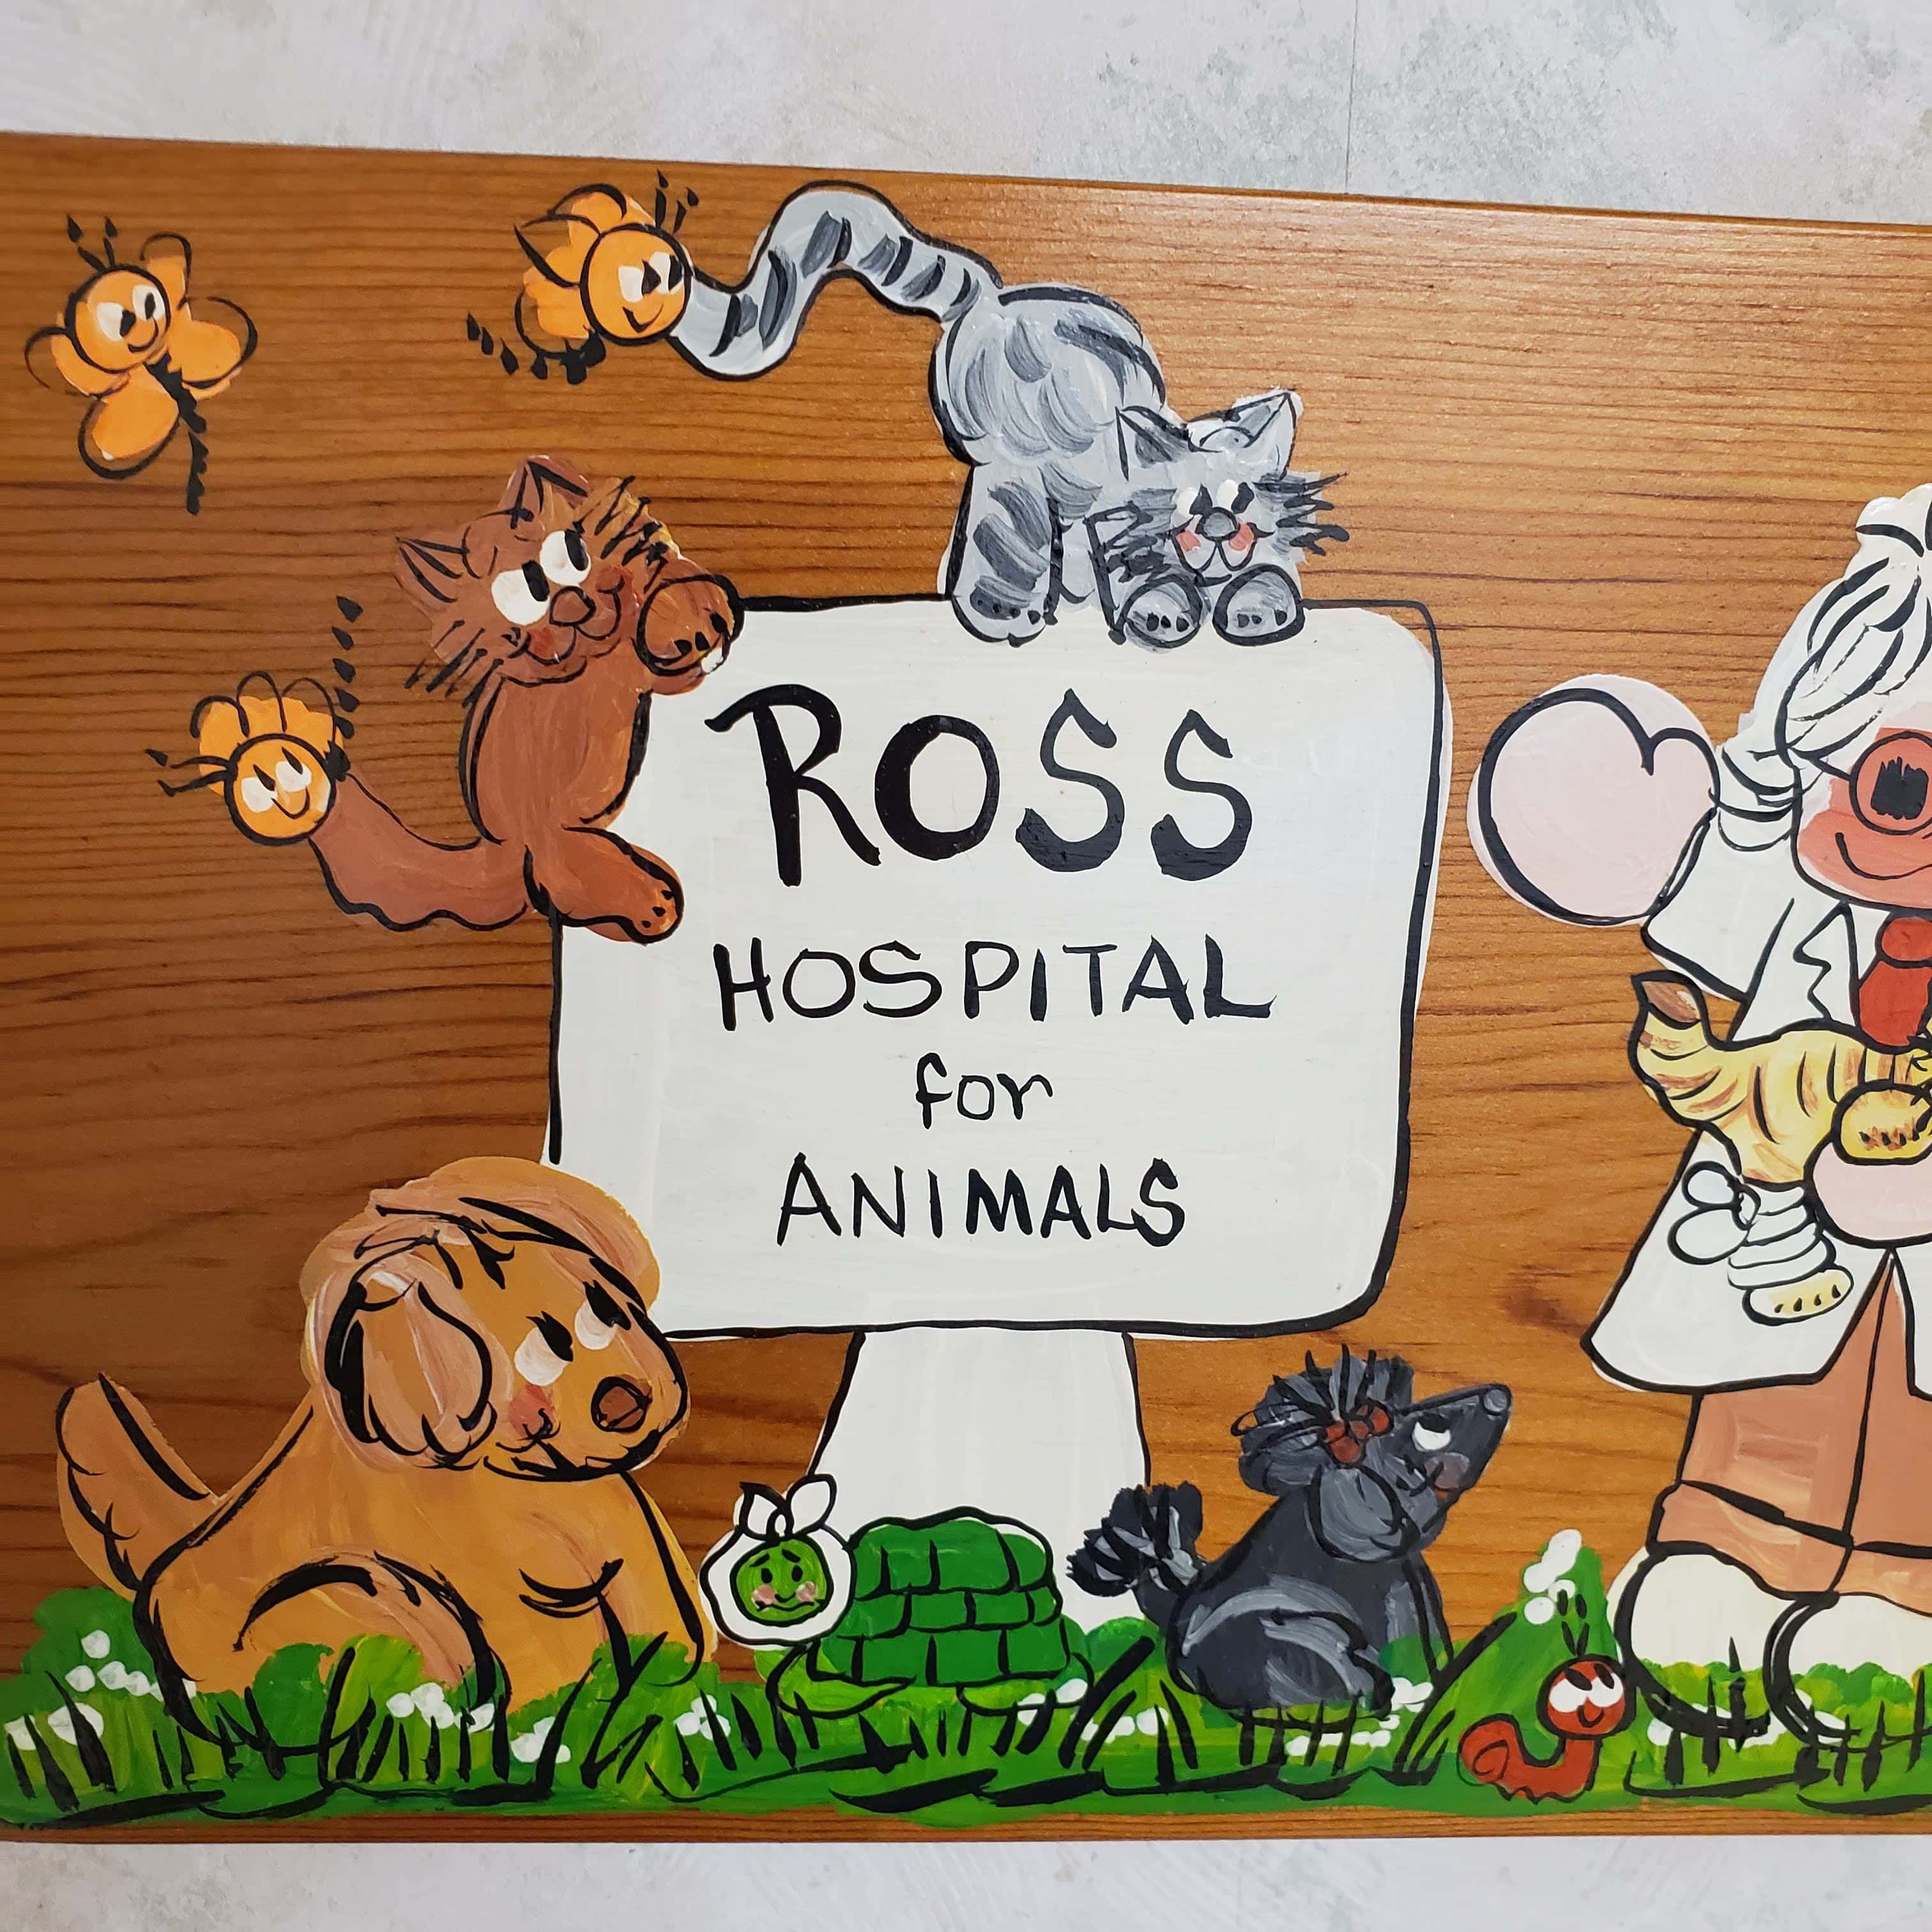 Ross Hospital for Animals - Bloomfield Twp, MI, US, vets near me